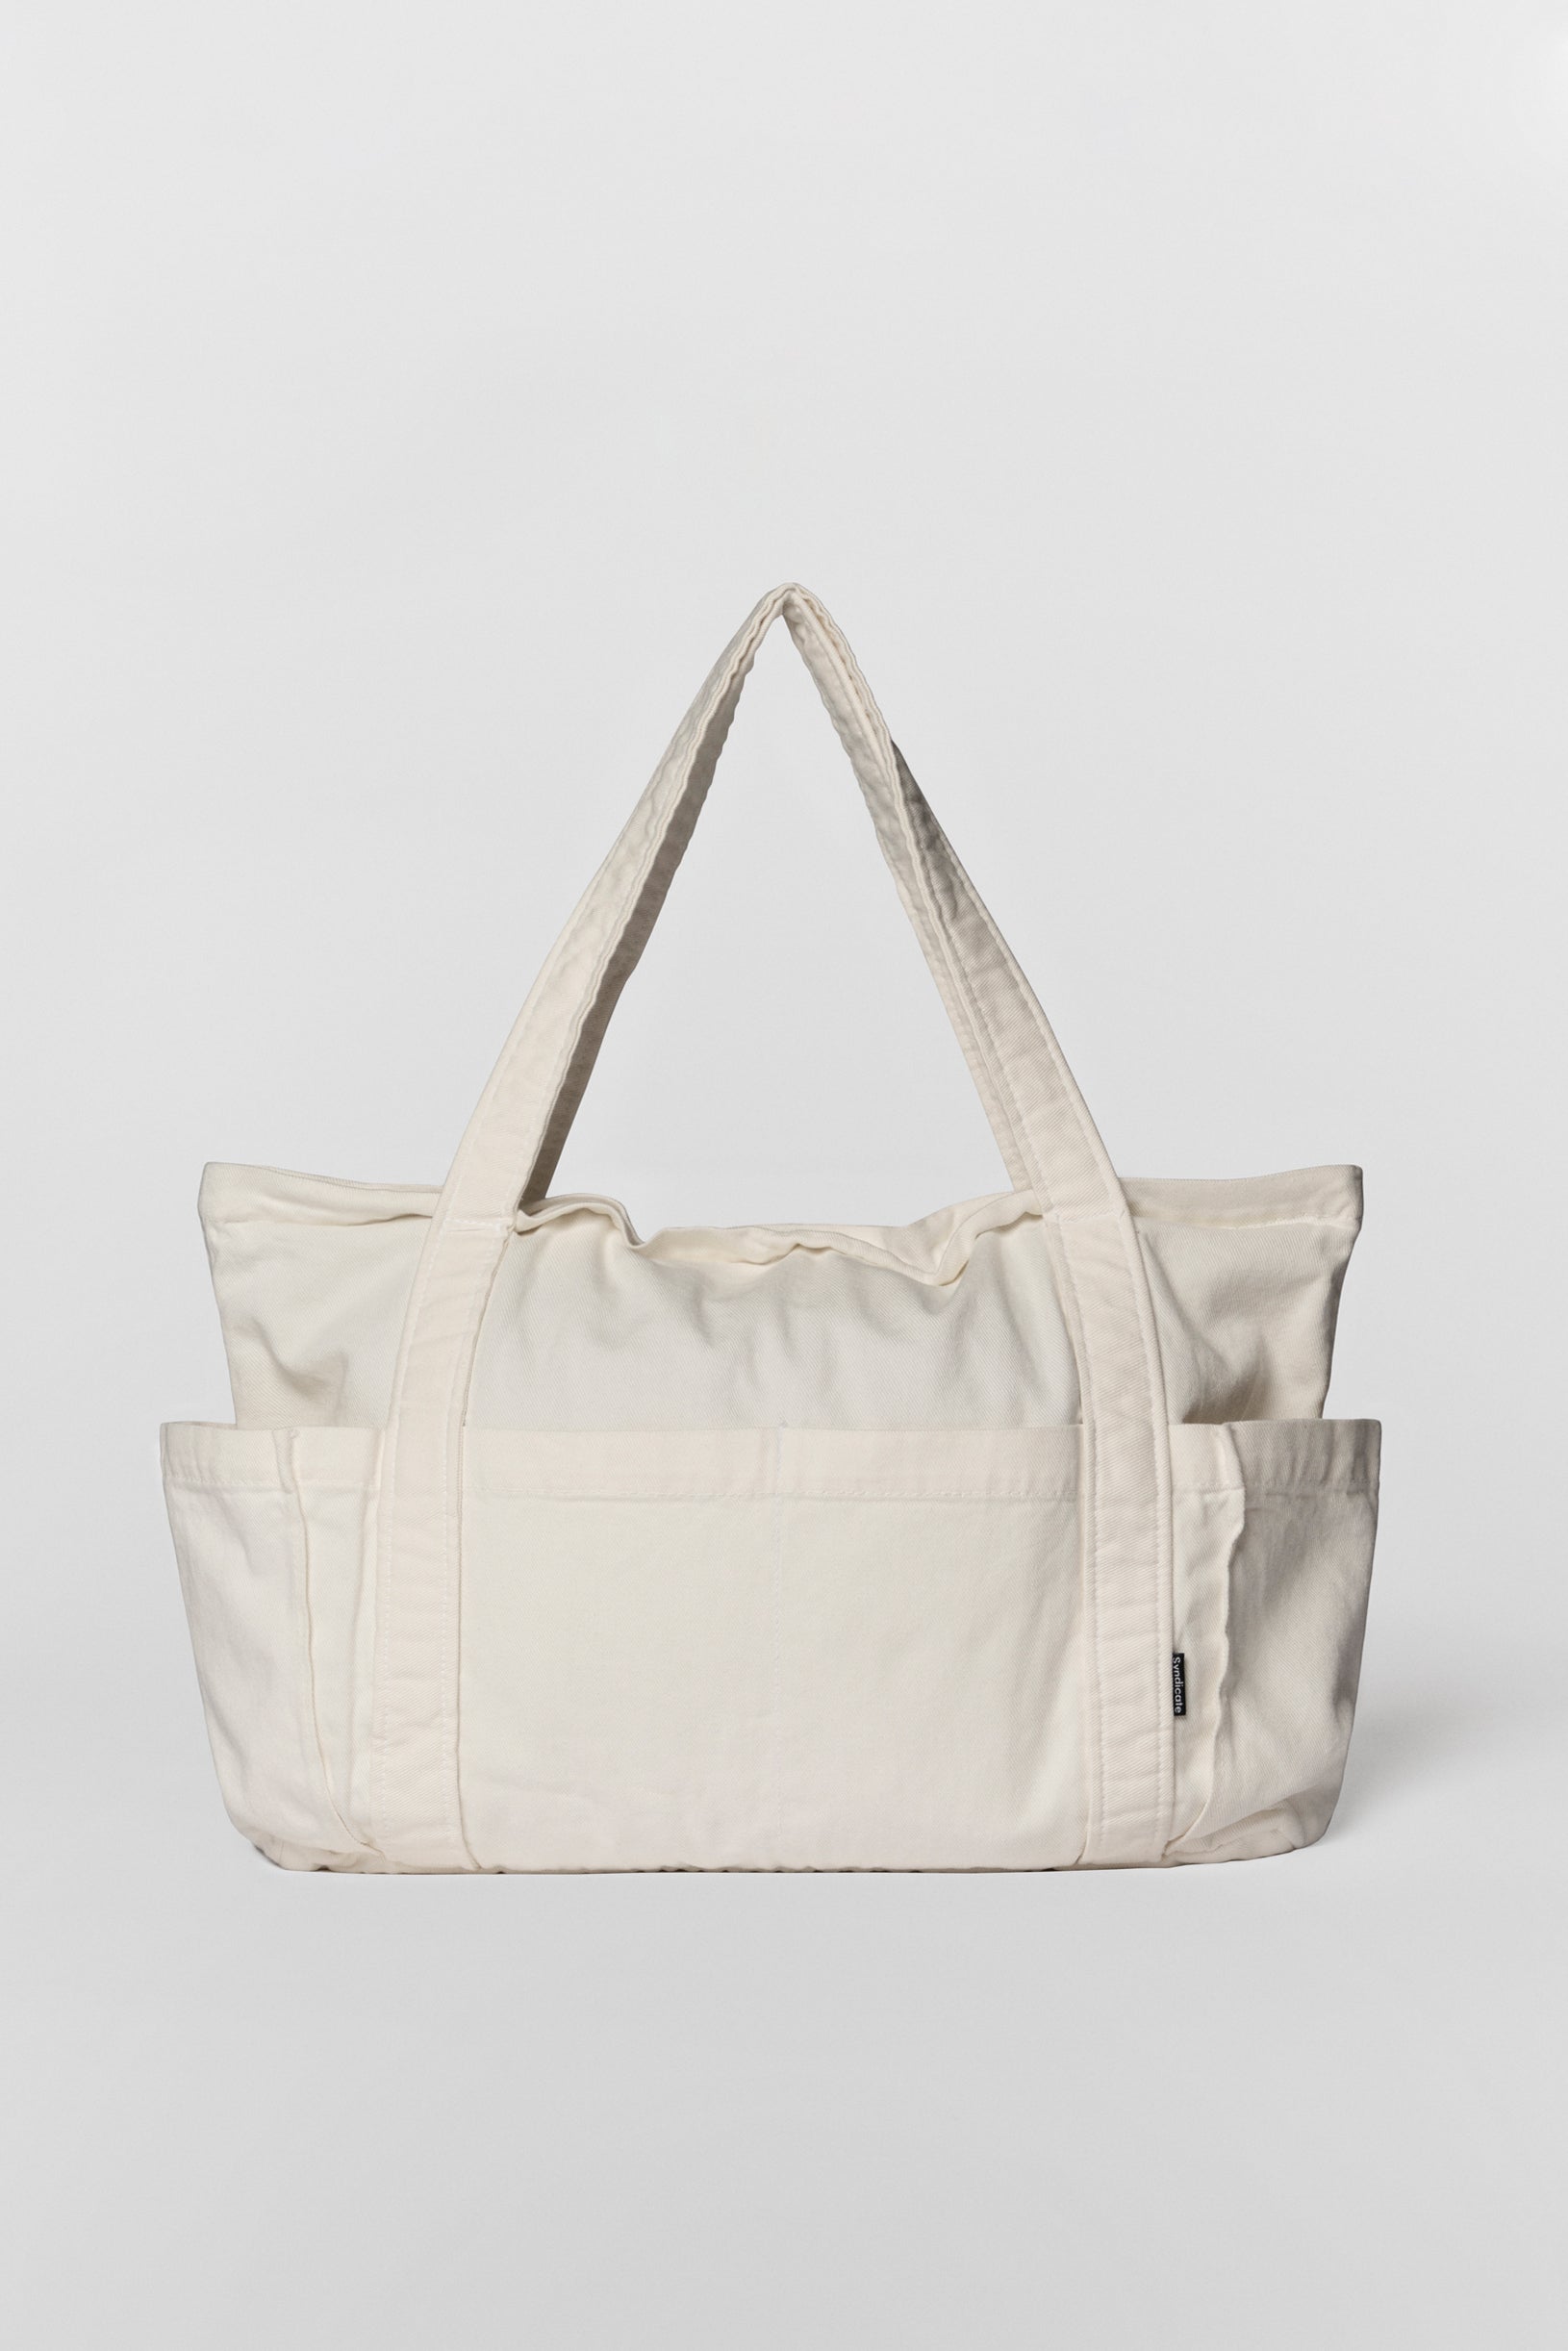 Cargo bag white